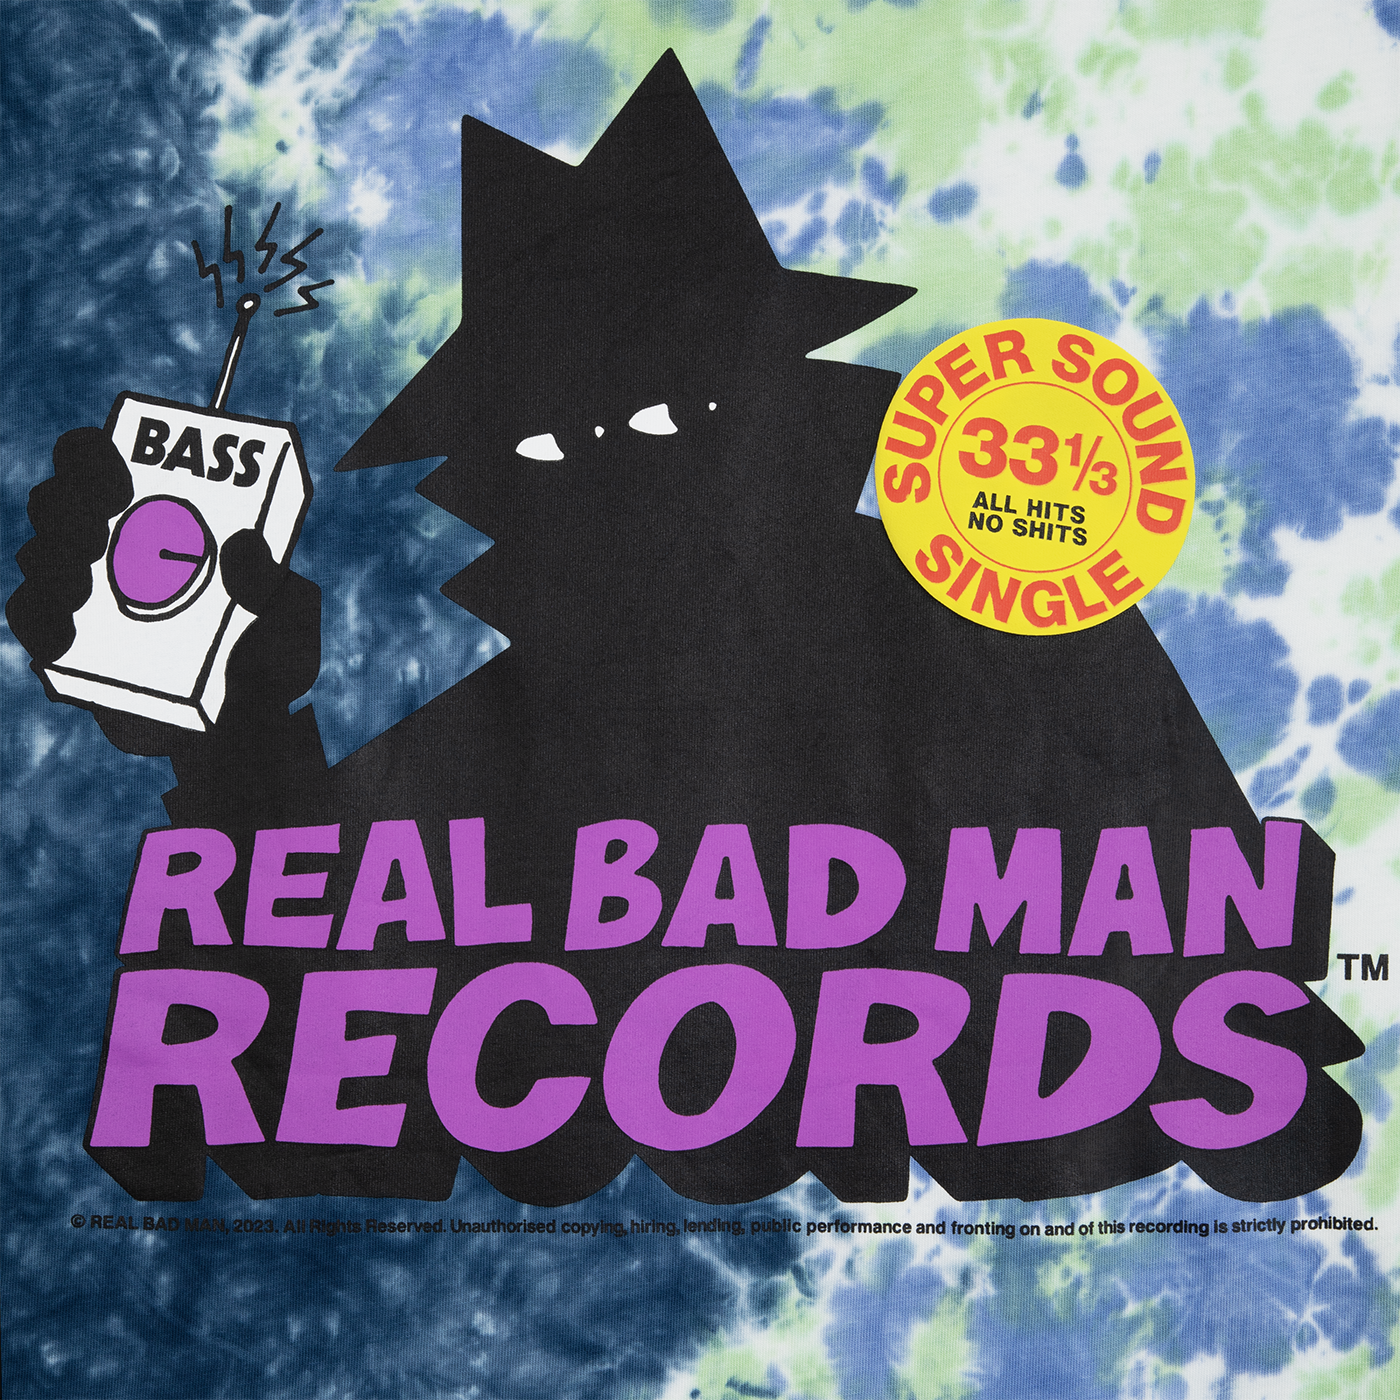 RBM Records T-Shirt